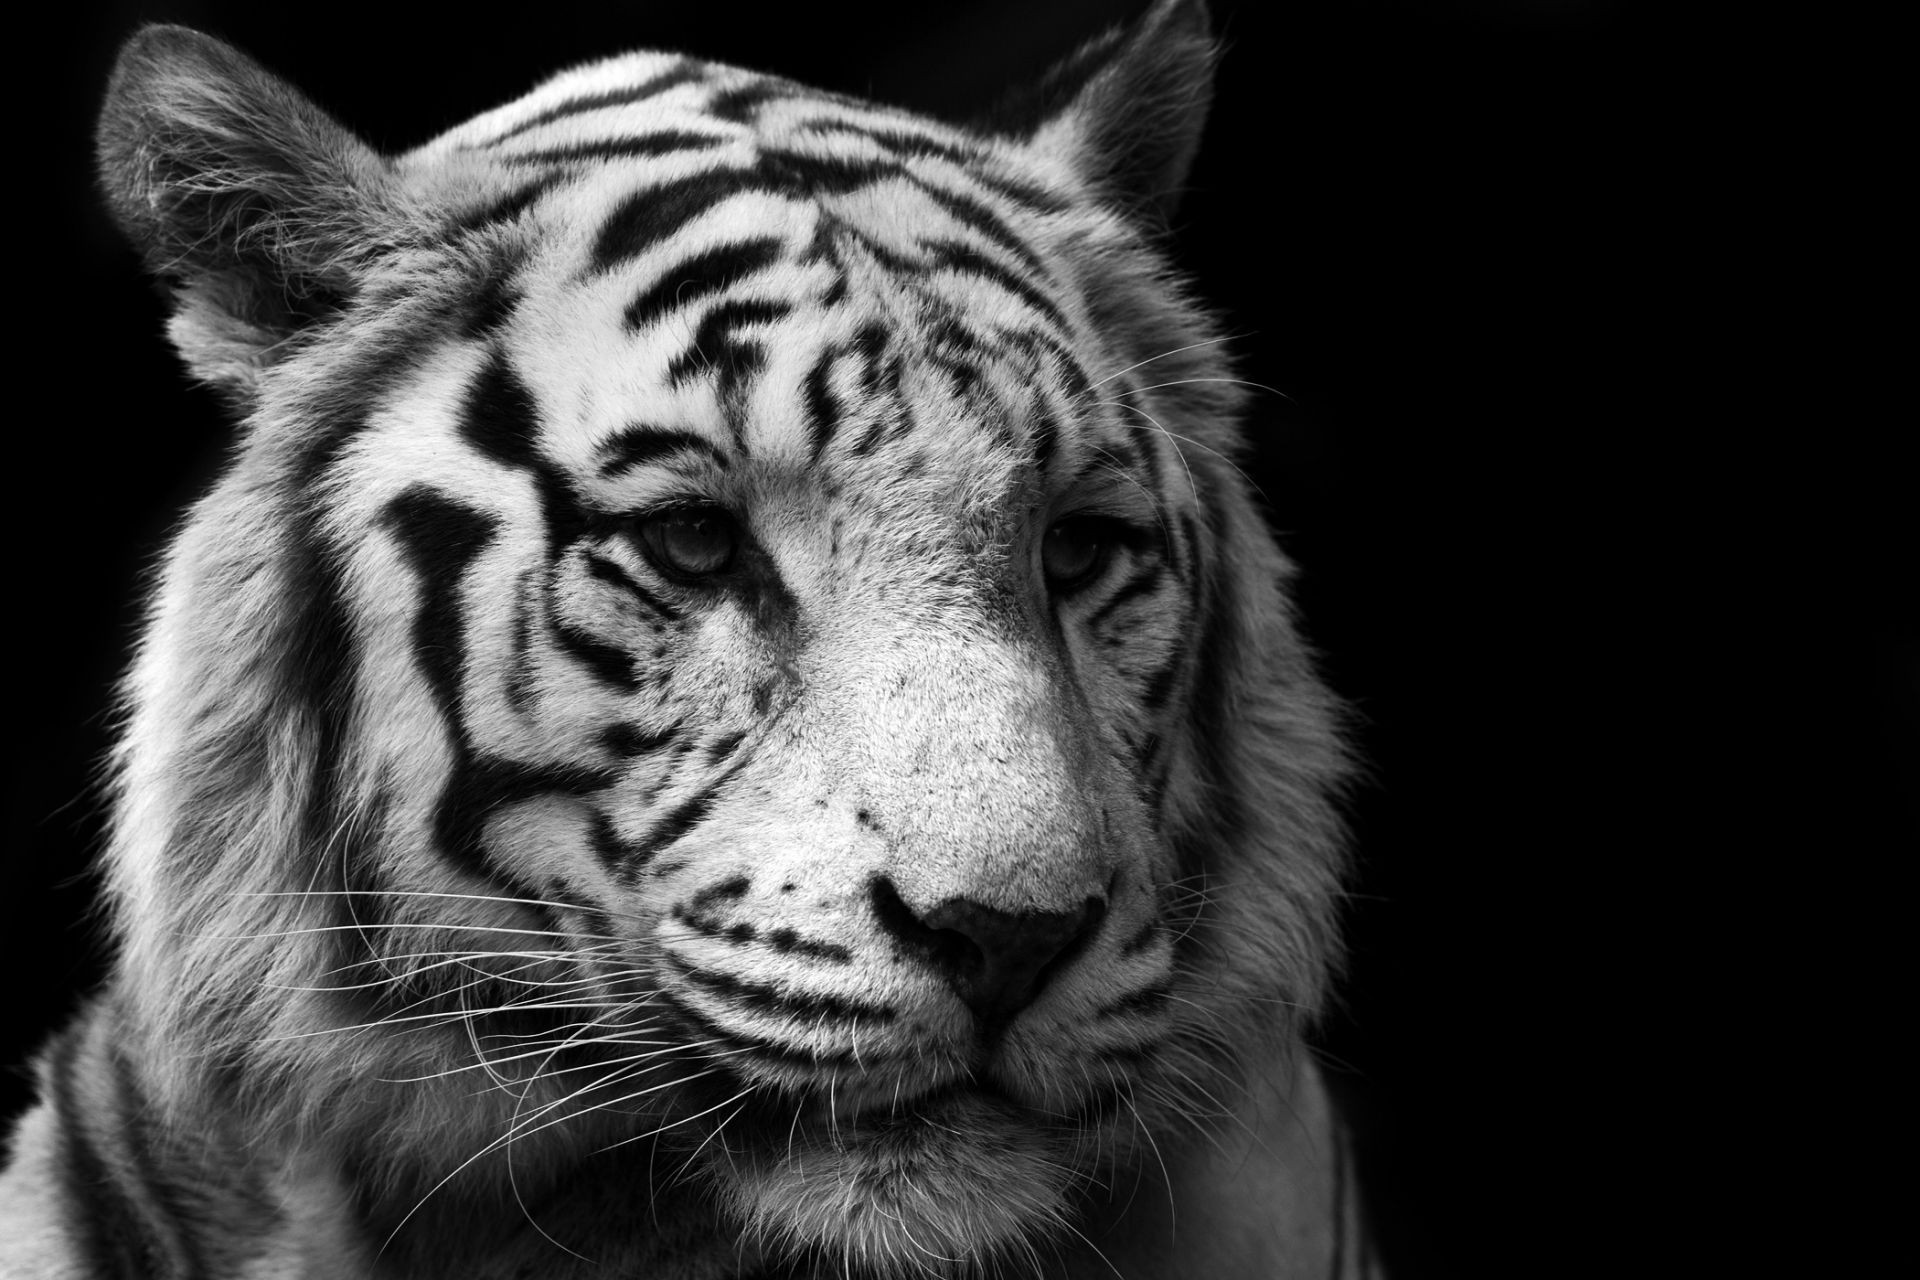 tigers cat animal mammal portrait tiger wildlife zoo predator fur eye carnivore hunter jungle angry danger big wild staring safari